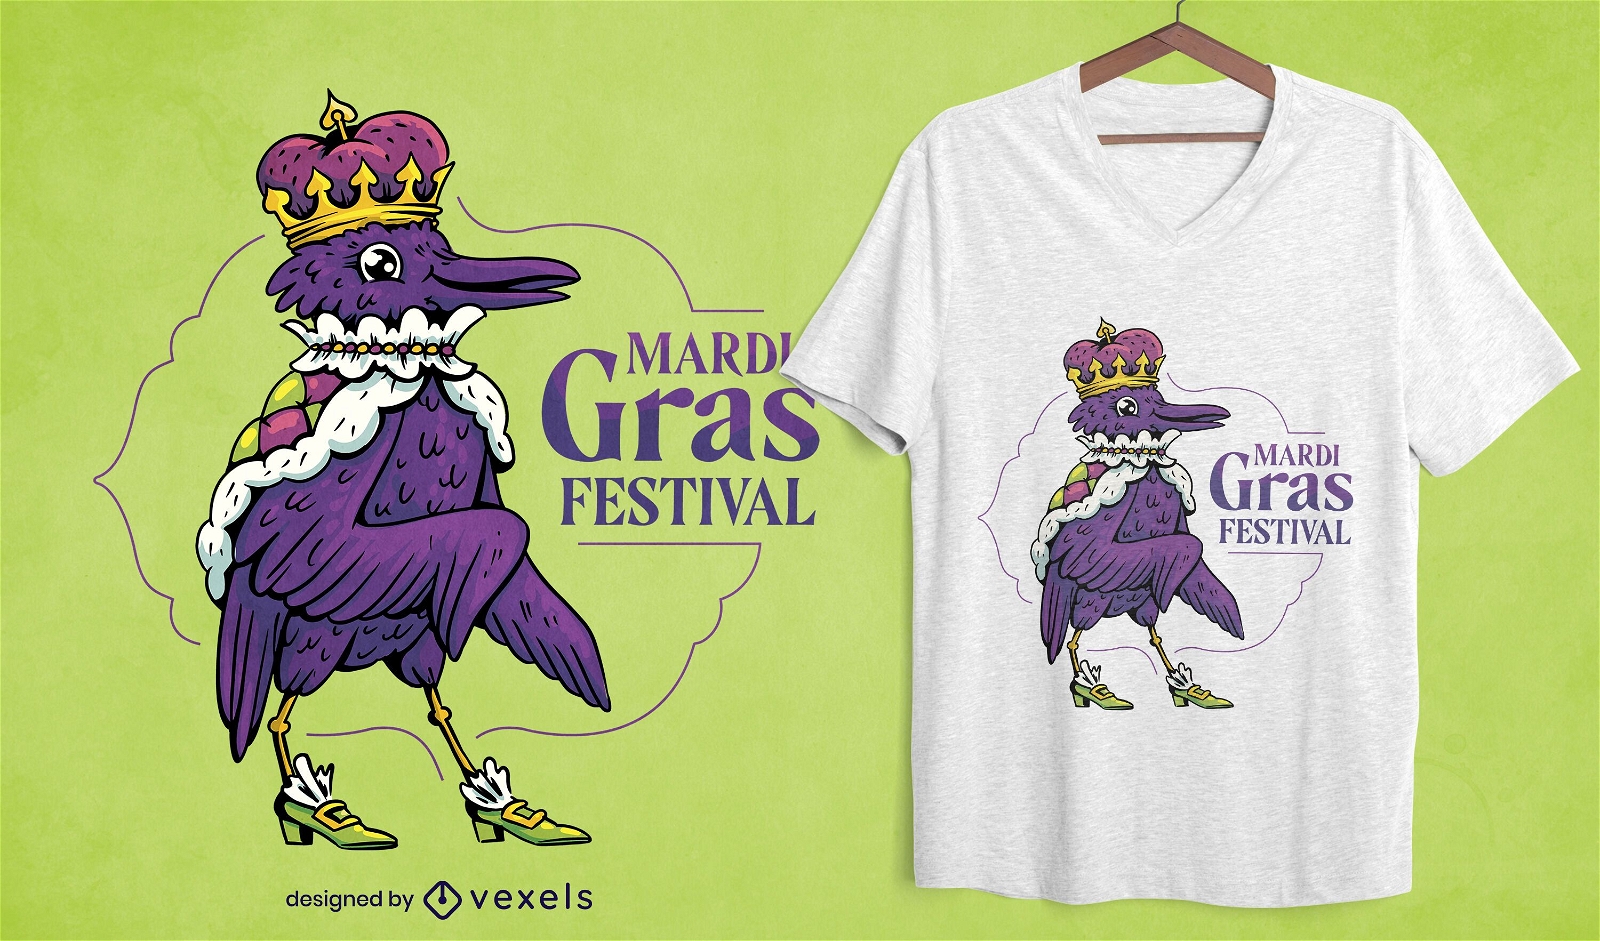 Mardi Gras Festival T-Shirt Design